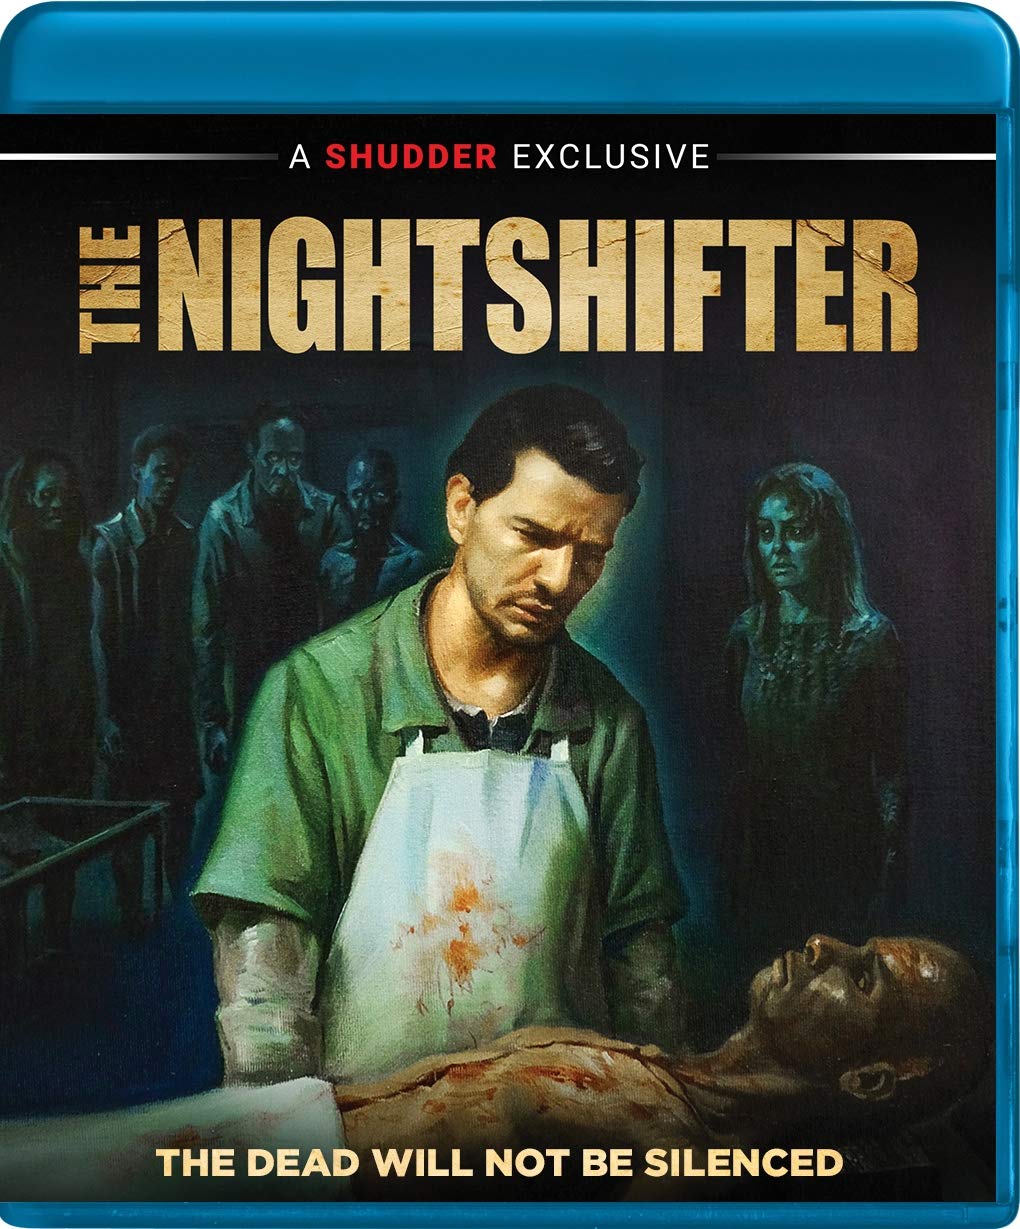 The Nightshifter 2019 Filmi Full HD izle | Film izle